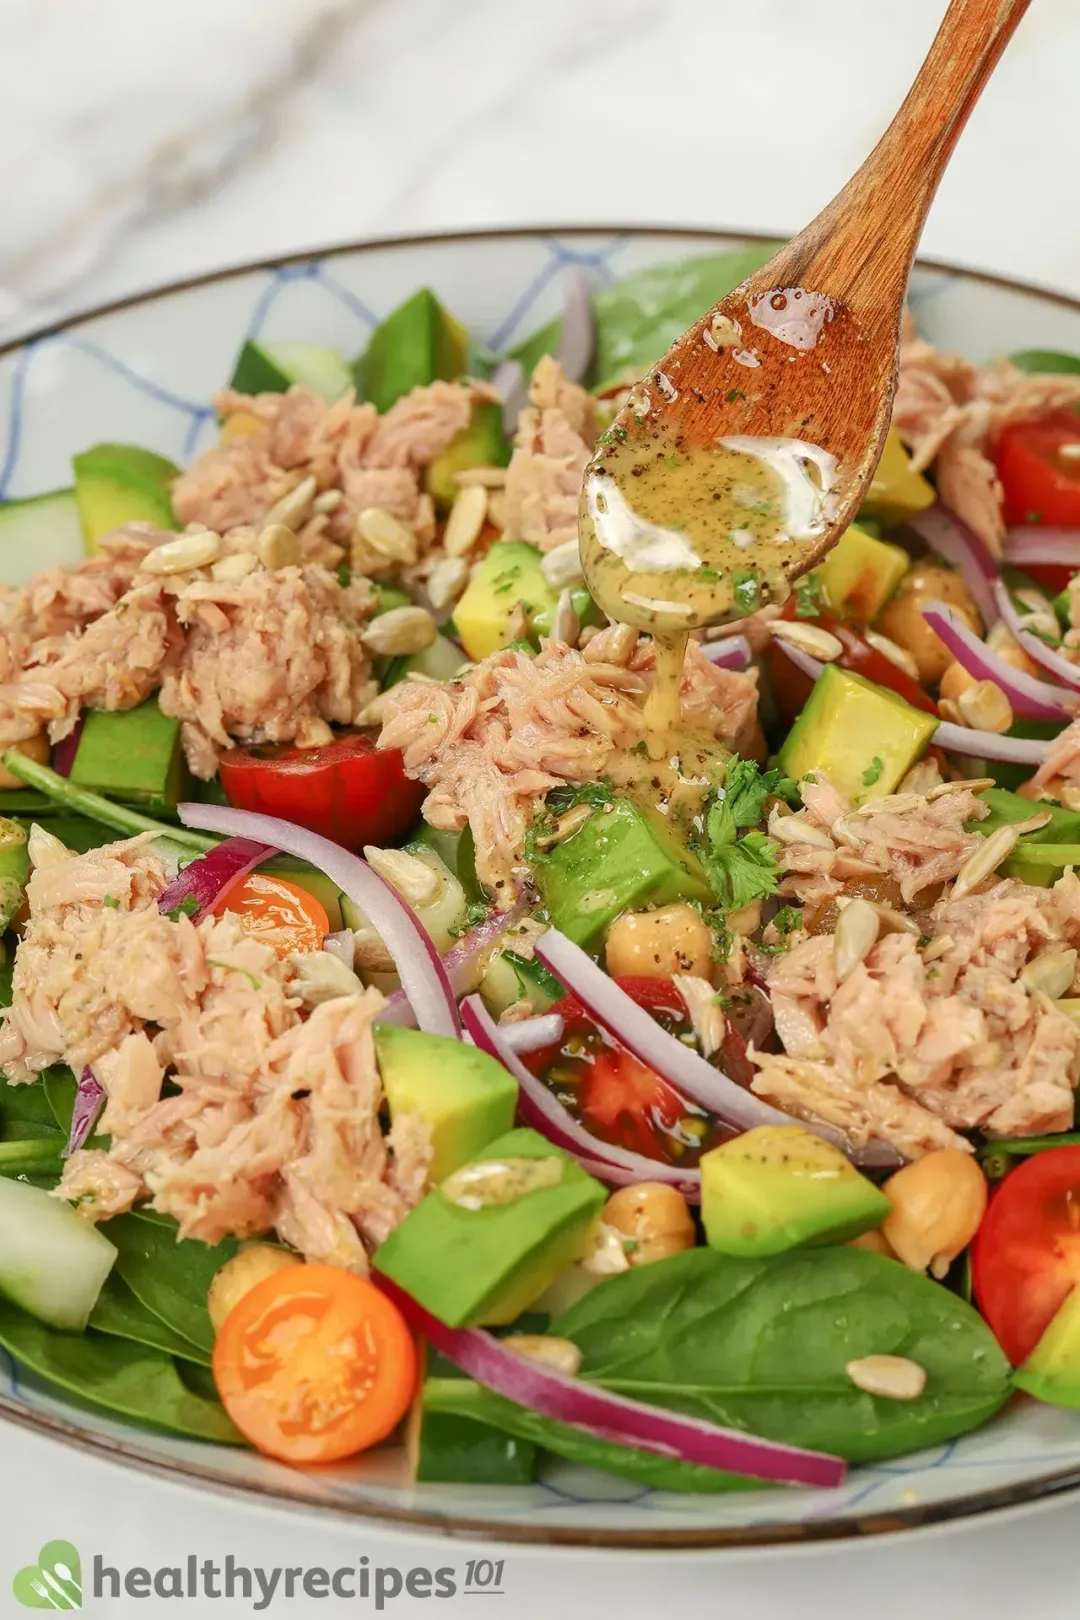 Is Avocado Tuna Salad Healthy